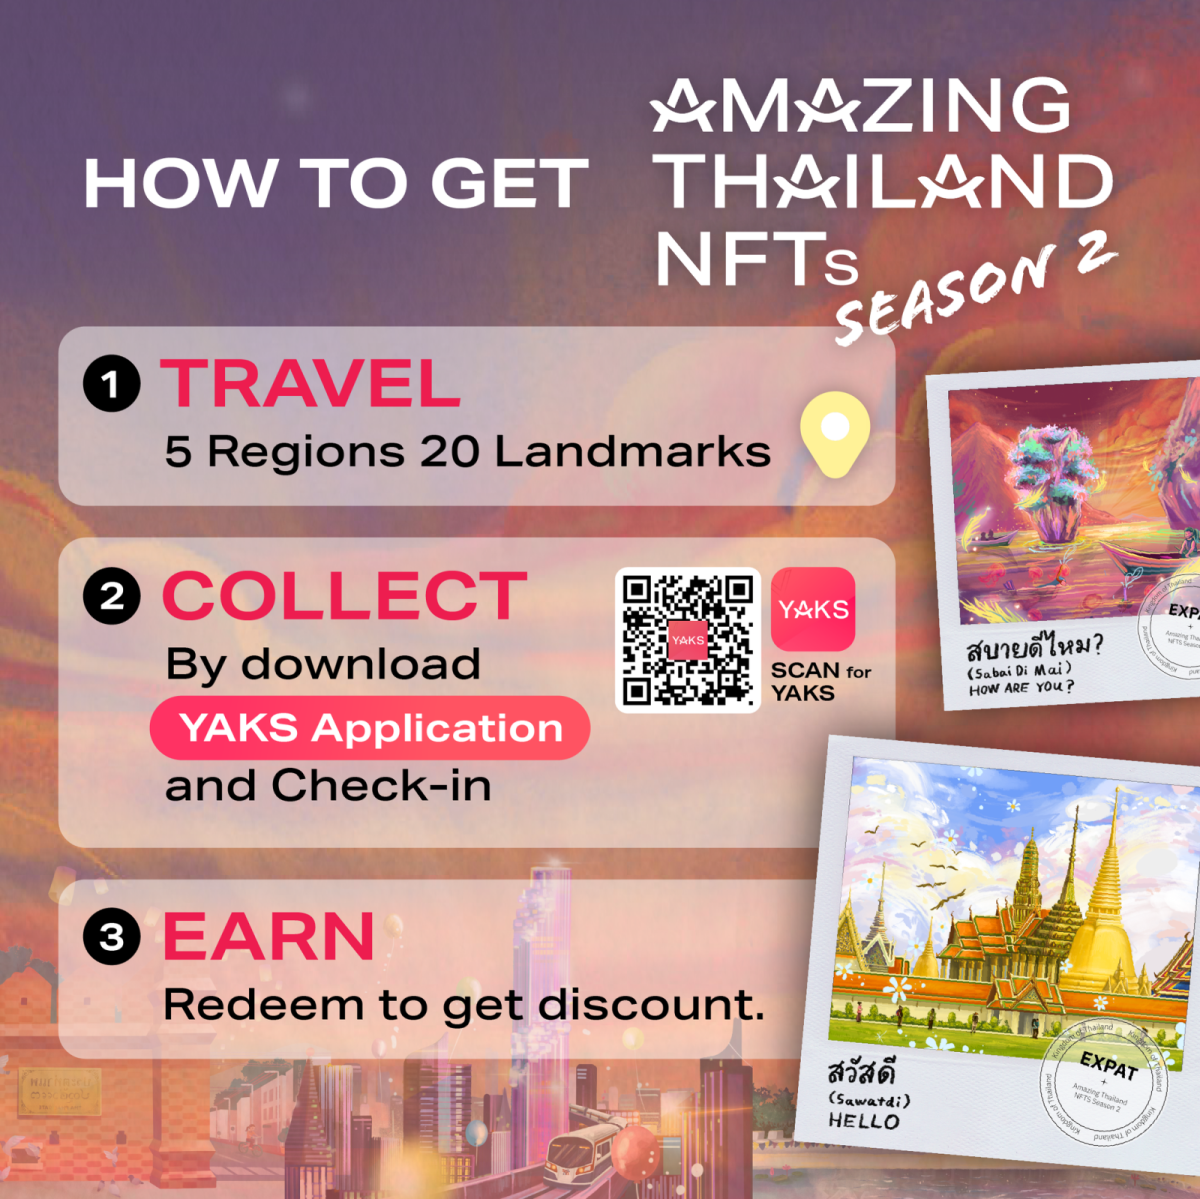 Amazing Thailand NFTs Season 2